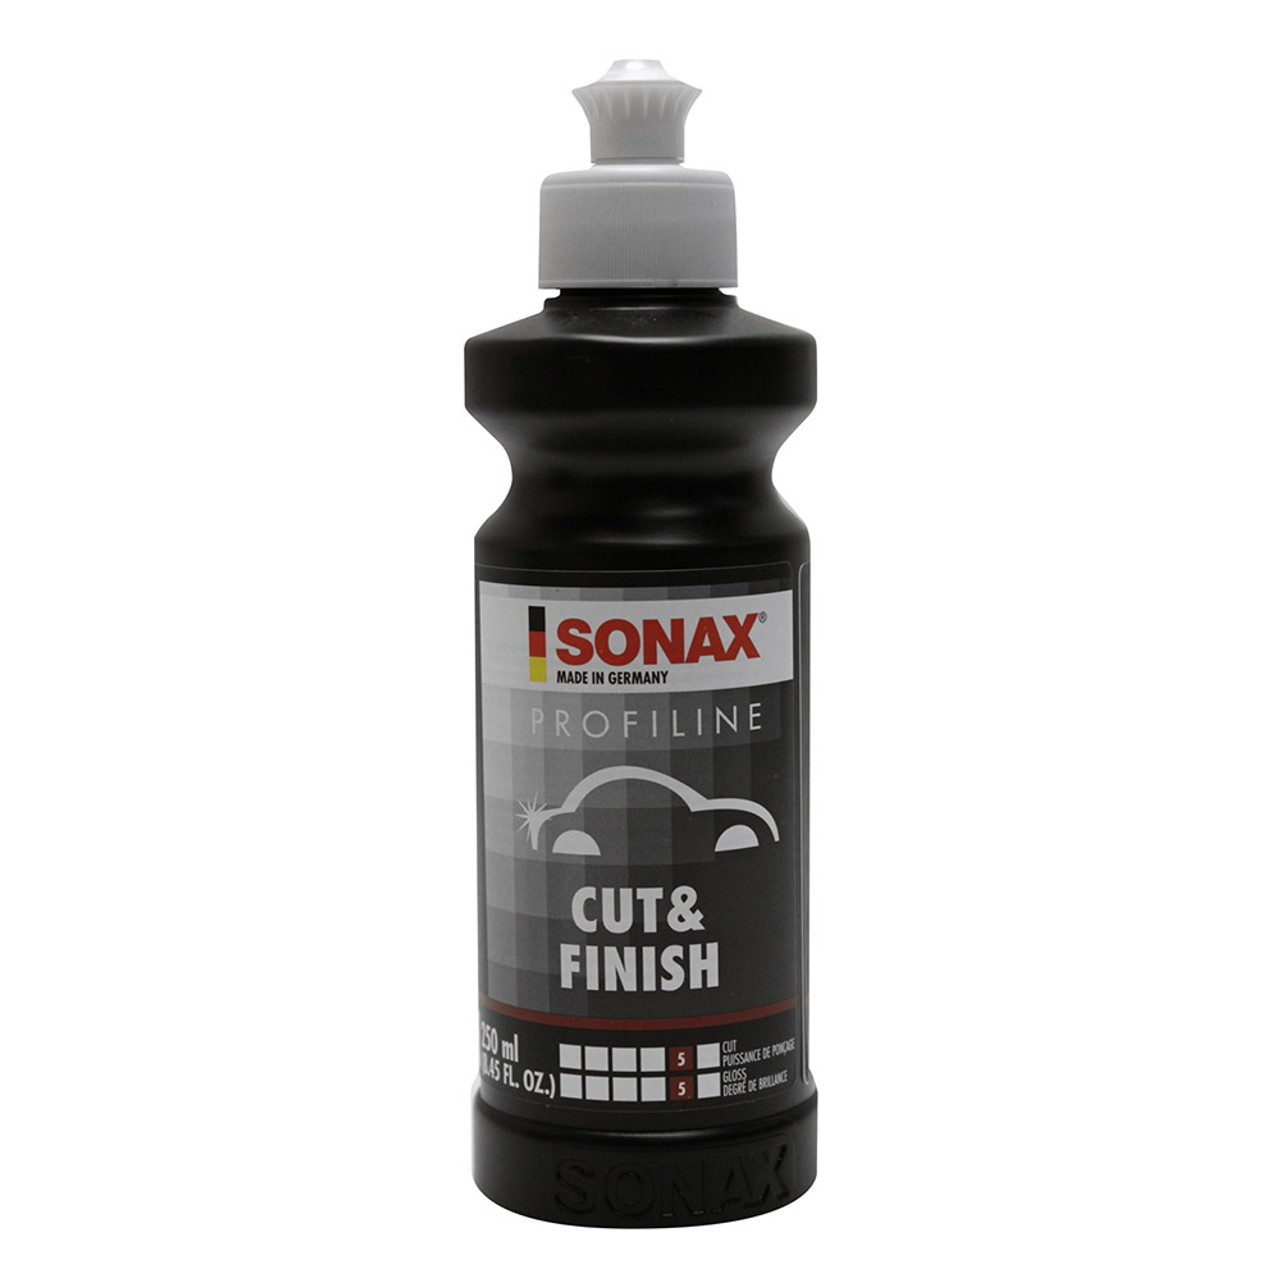 Sonax Cut & Finish Cut & Finish. Professional Detailing Products